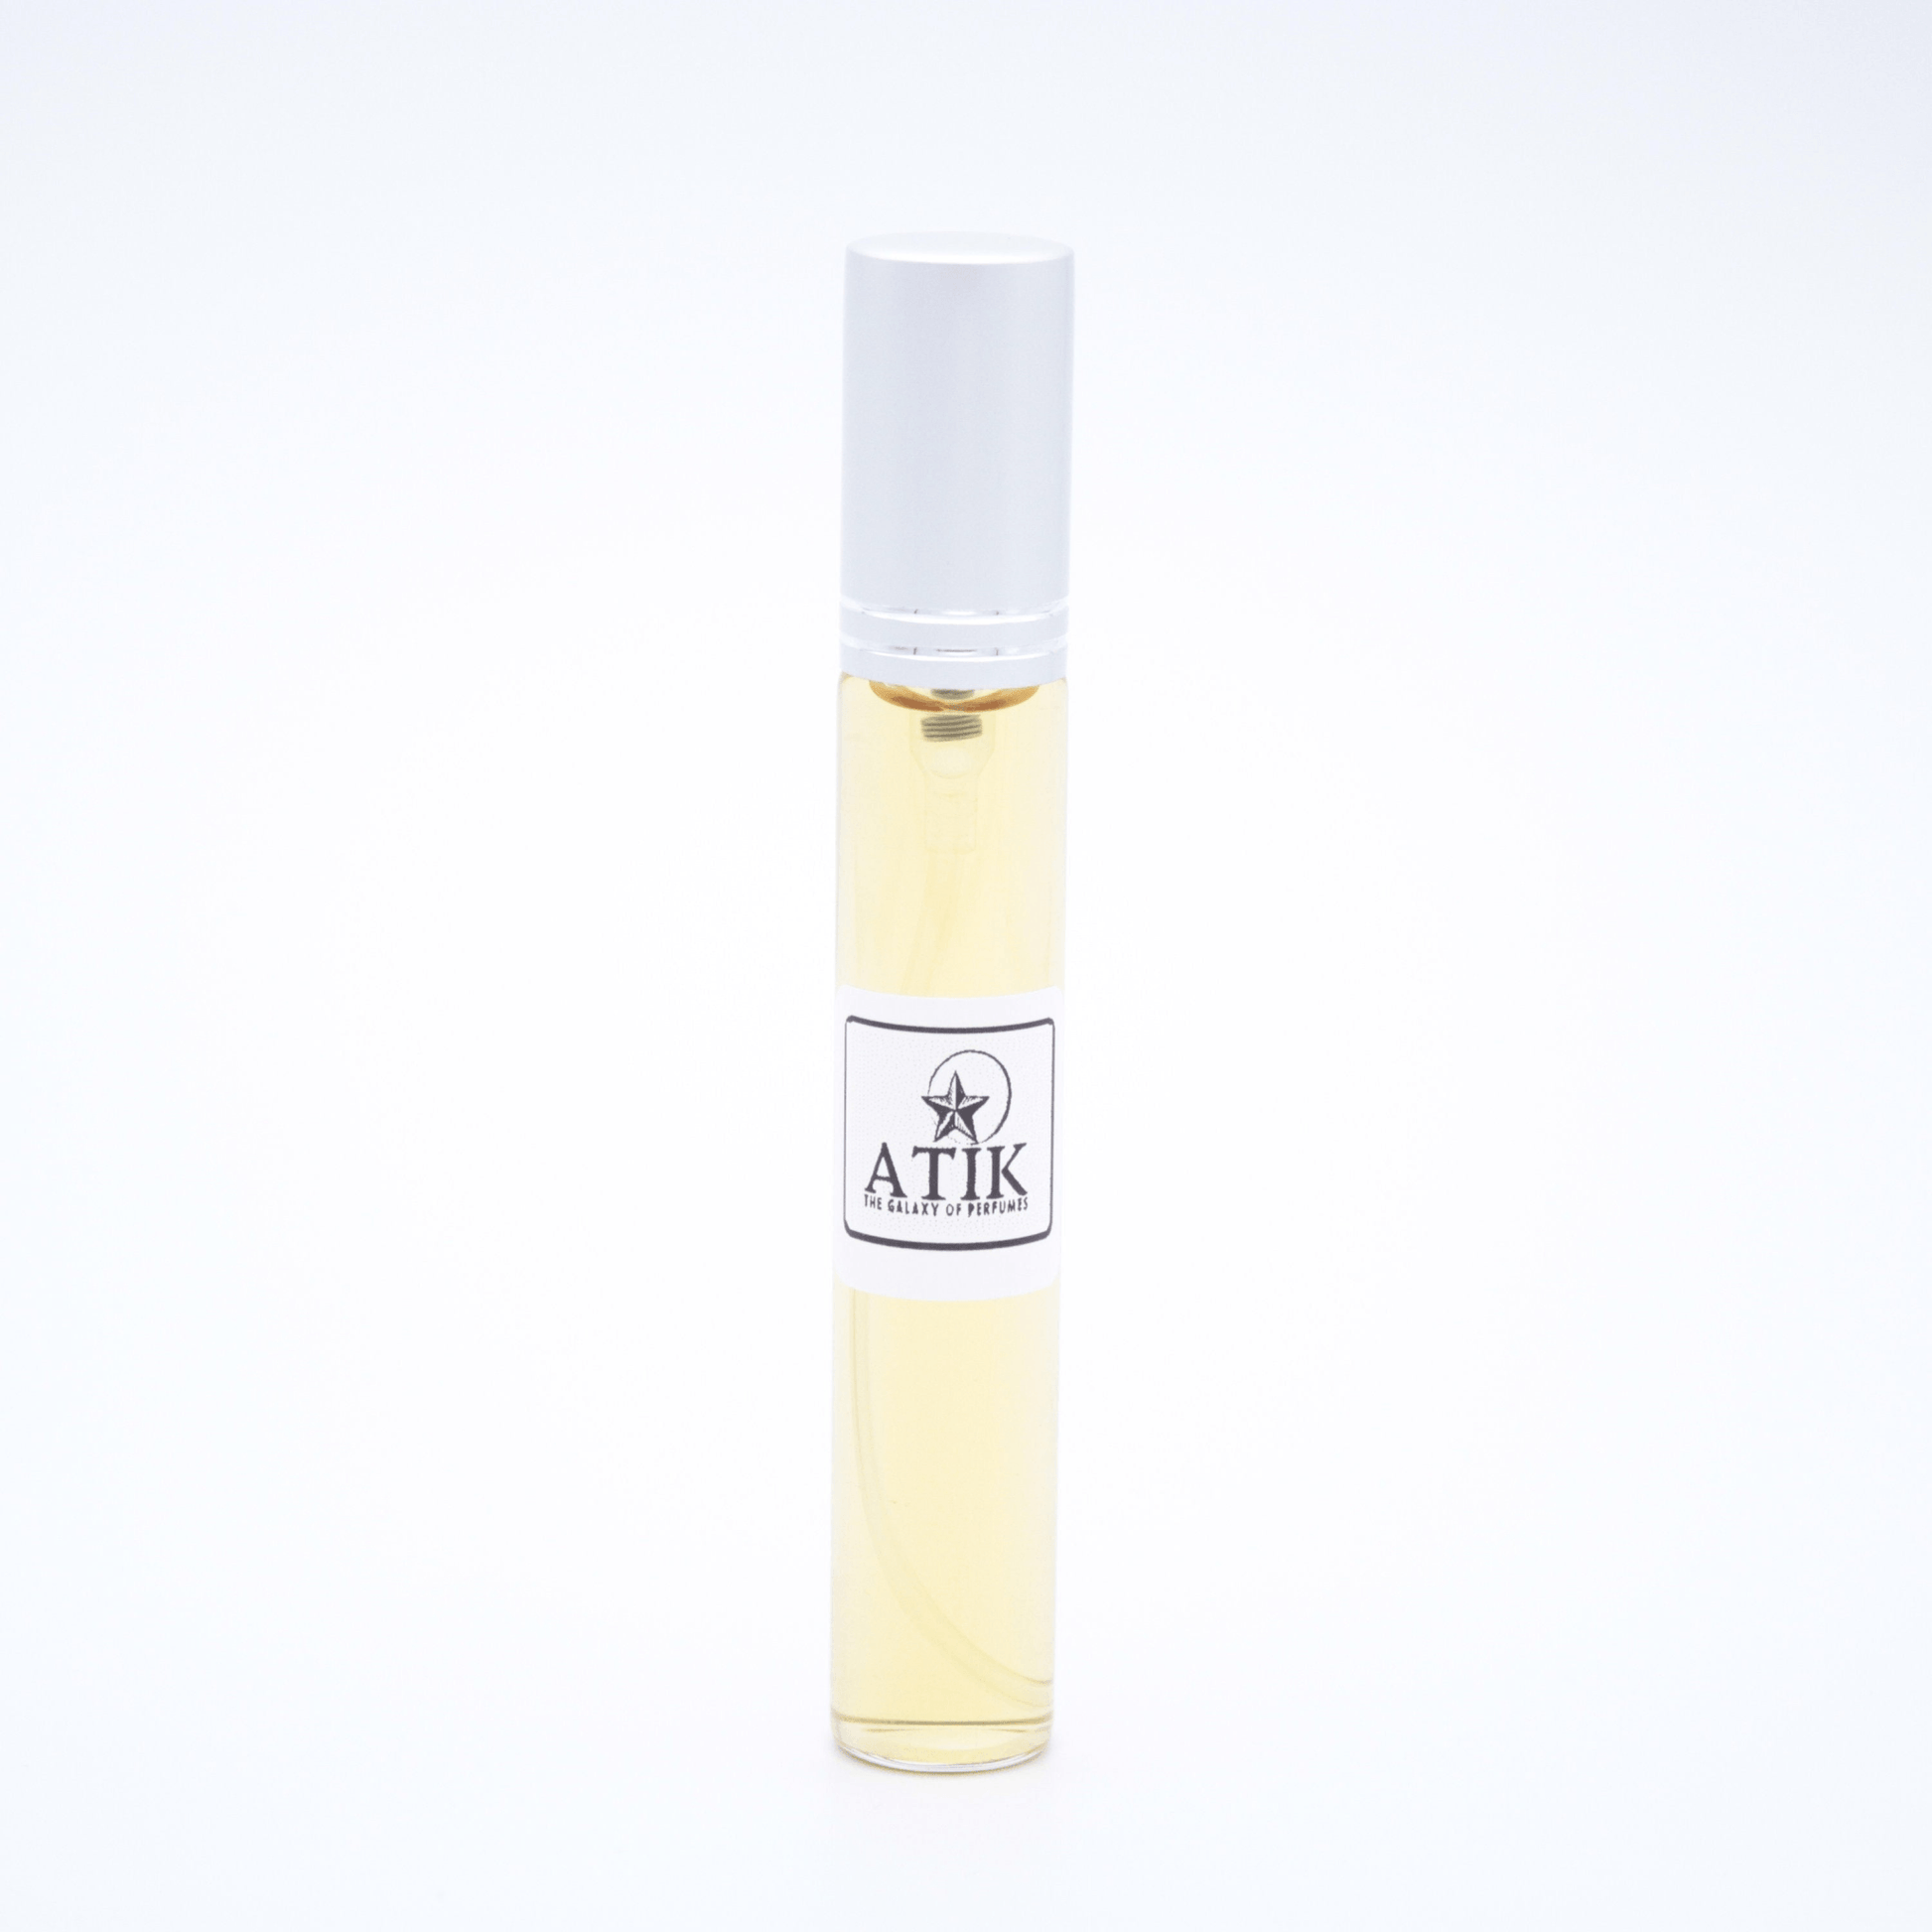 Fierce Perfume Spray Men Fragrance - Atik Perfumes